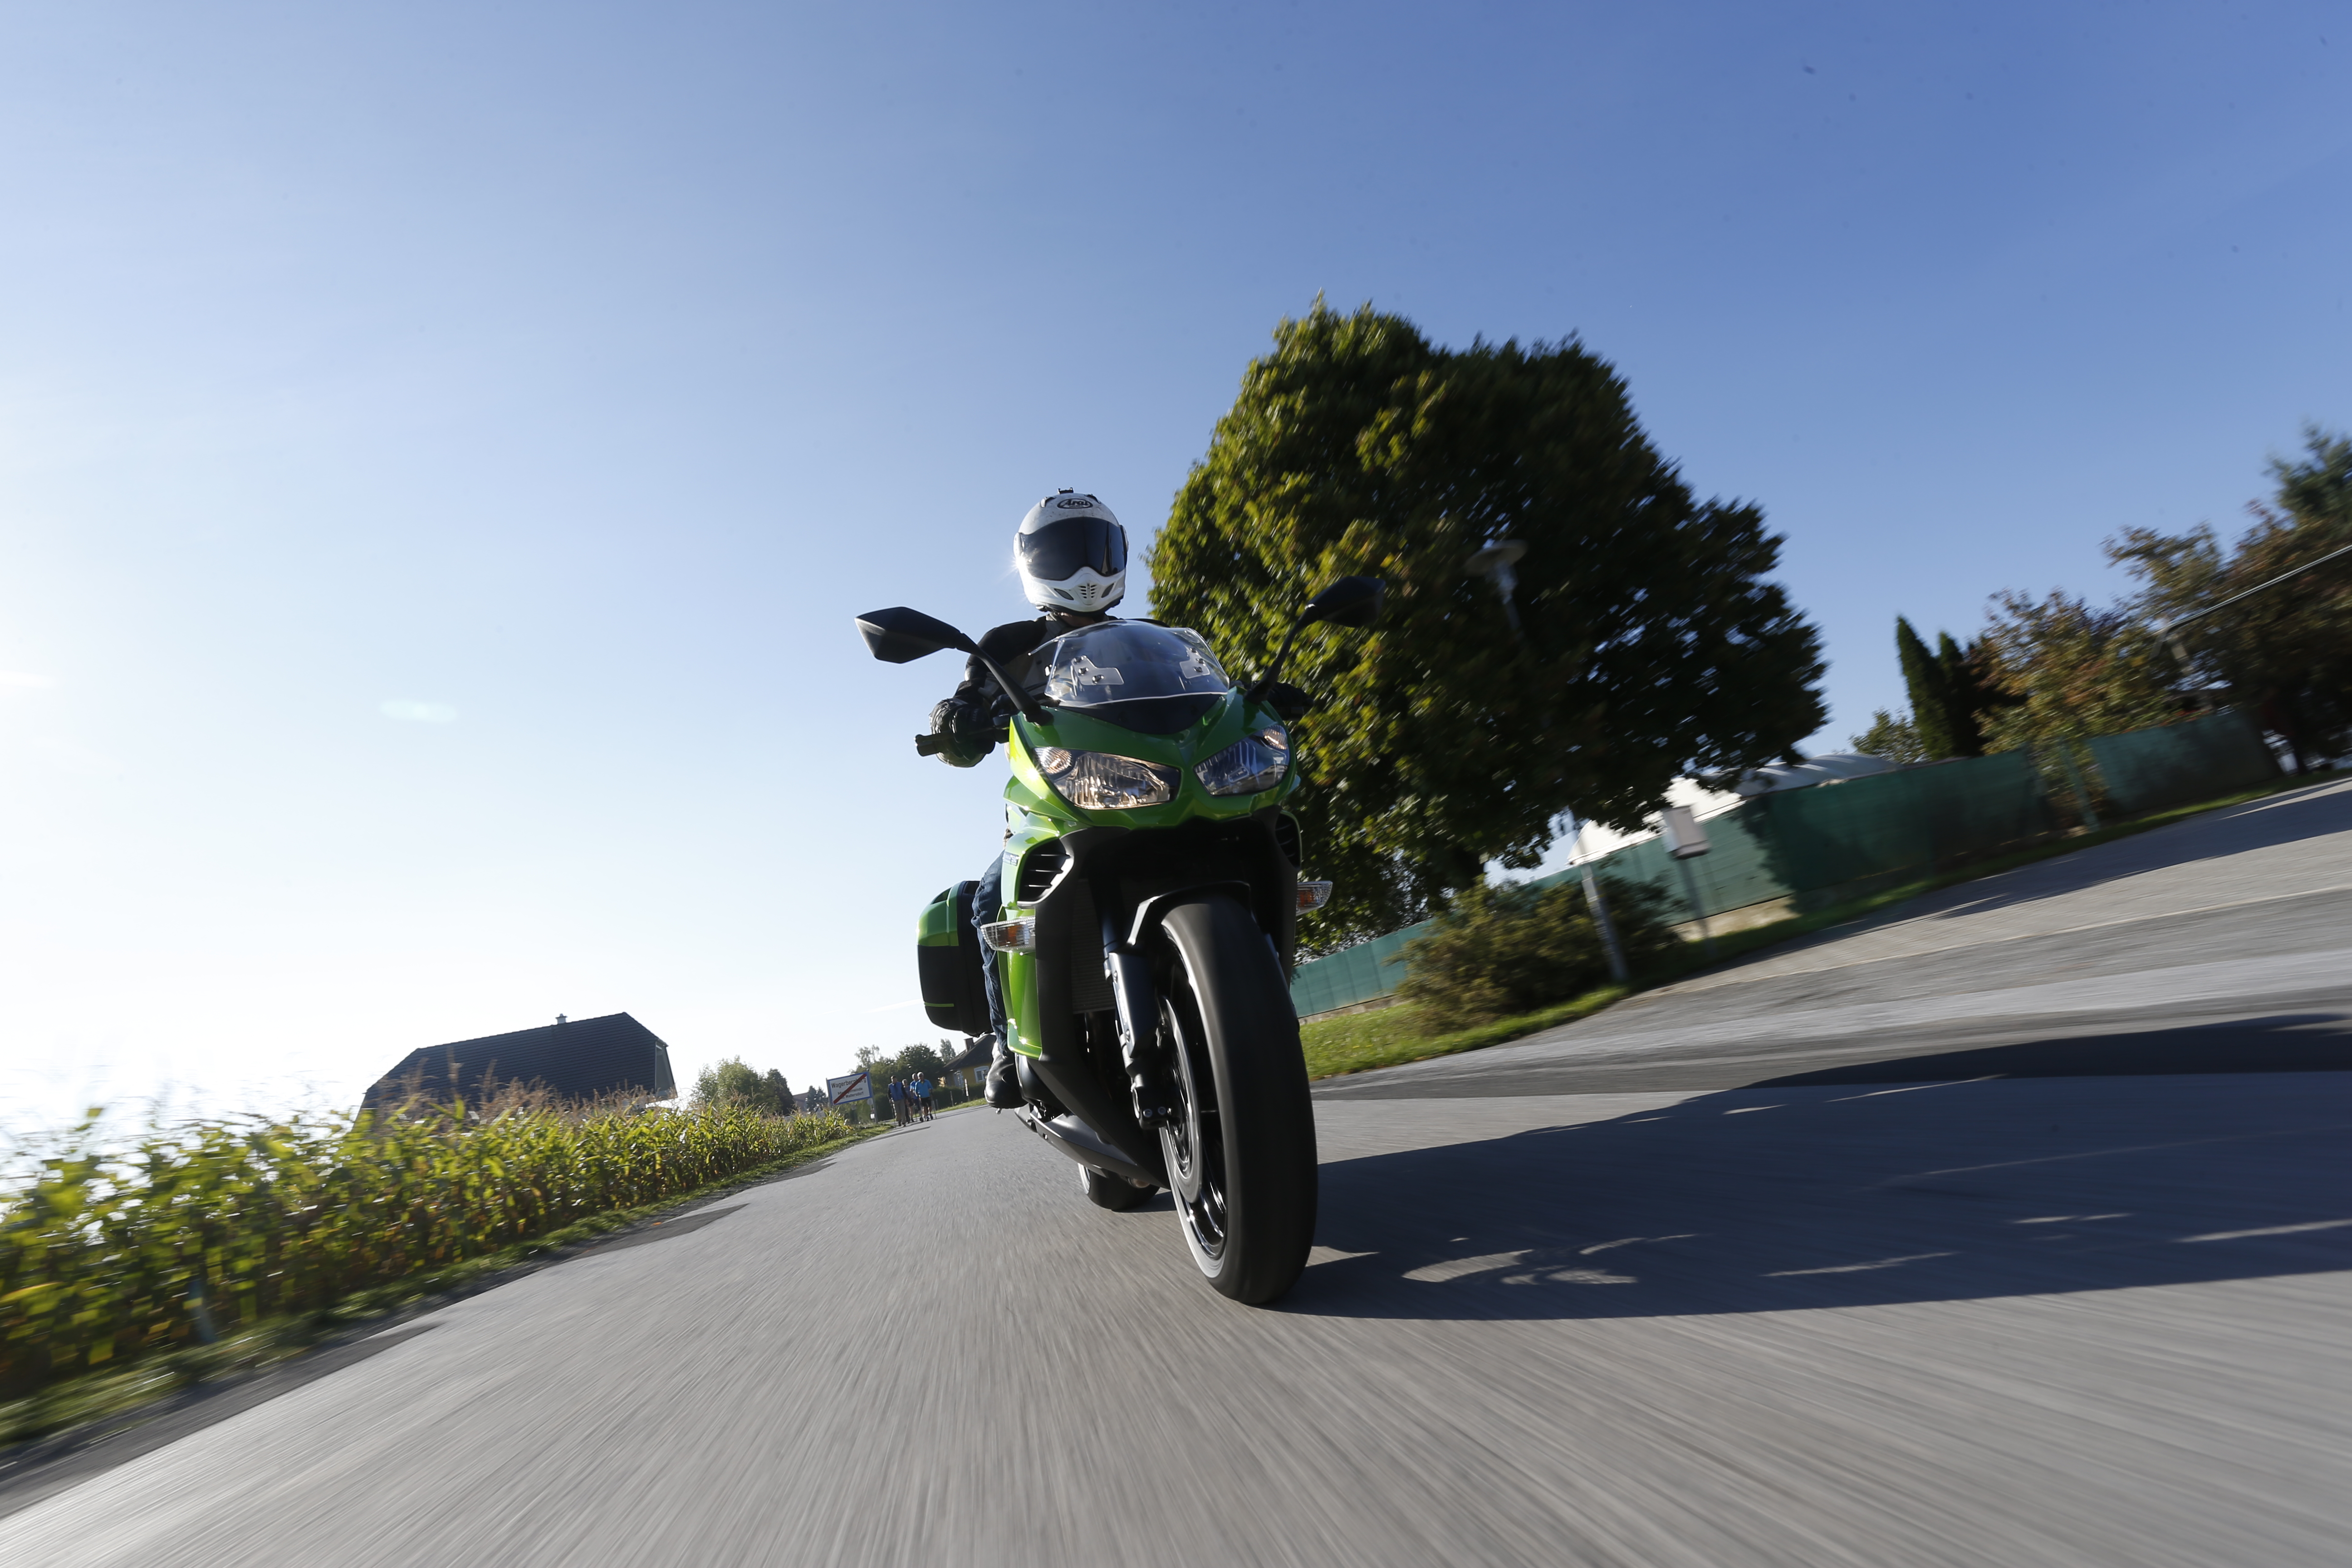 First Ride: 2014 Kawasaki Z1000SX review